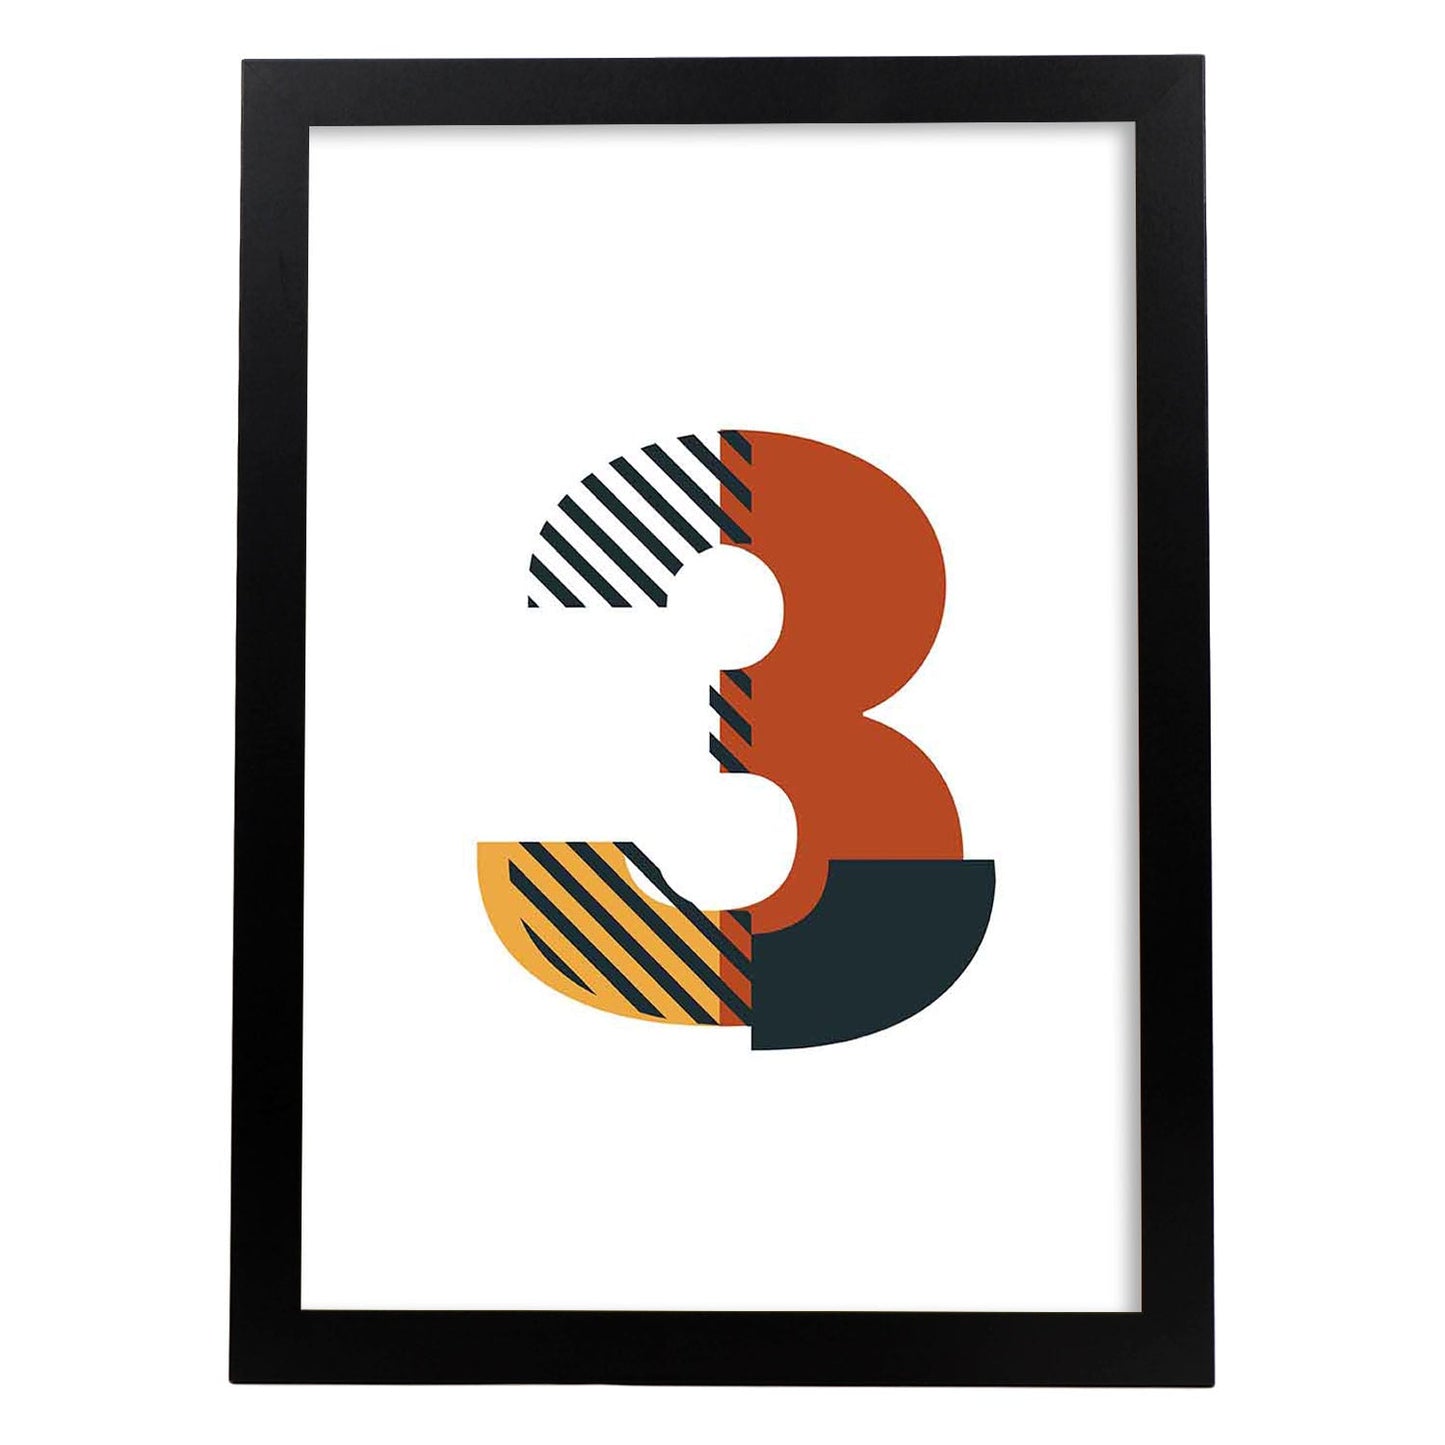 Poster de número 3. Lámina estilo Geometria con imágenes del alfabeto.-Artwork-Nacnic-A3-Marco Negro-Nacnic Estudio SL